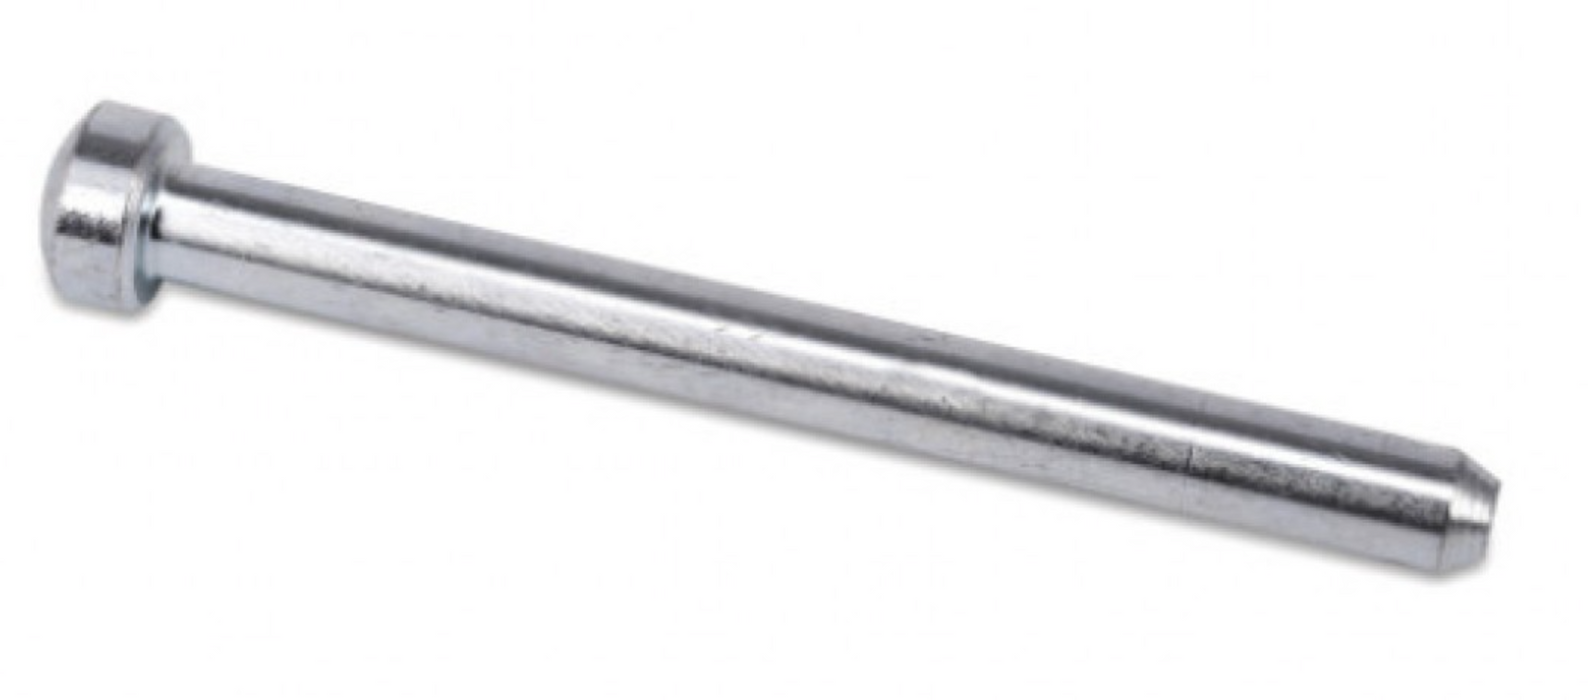 Freeline Bushing Pin For Pad 6mm X 72mm 20.12193.06